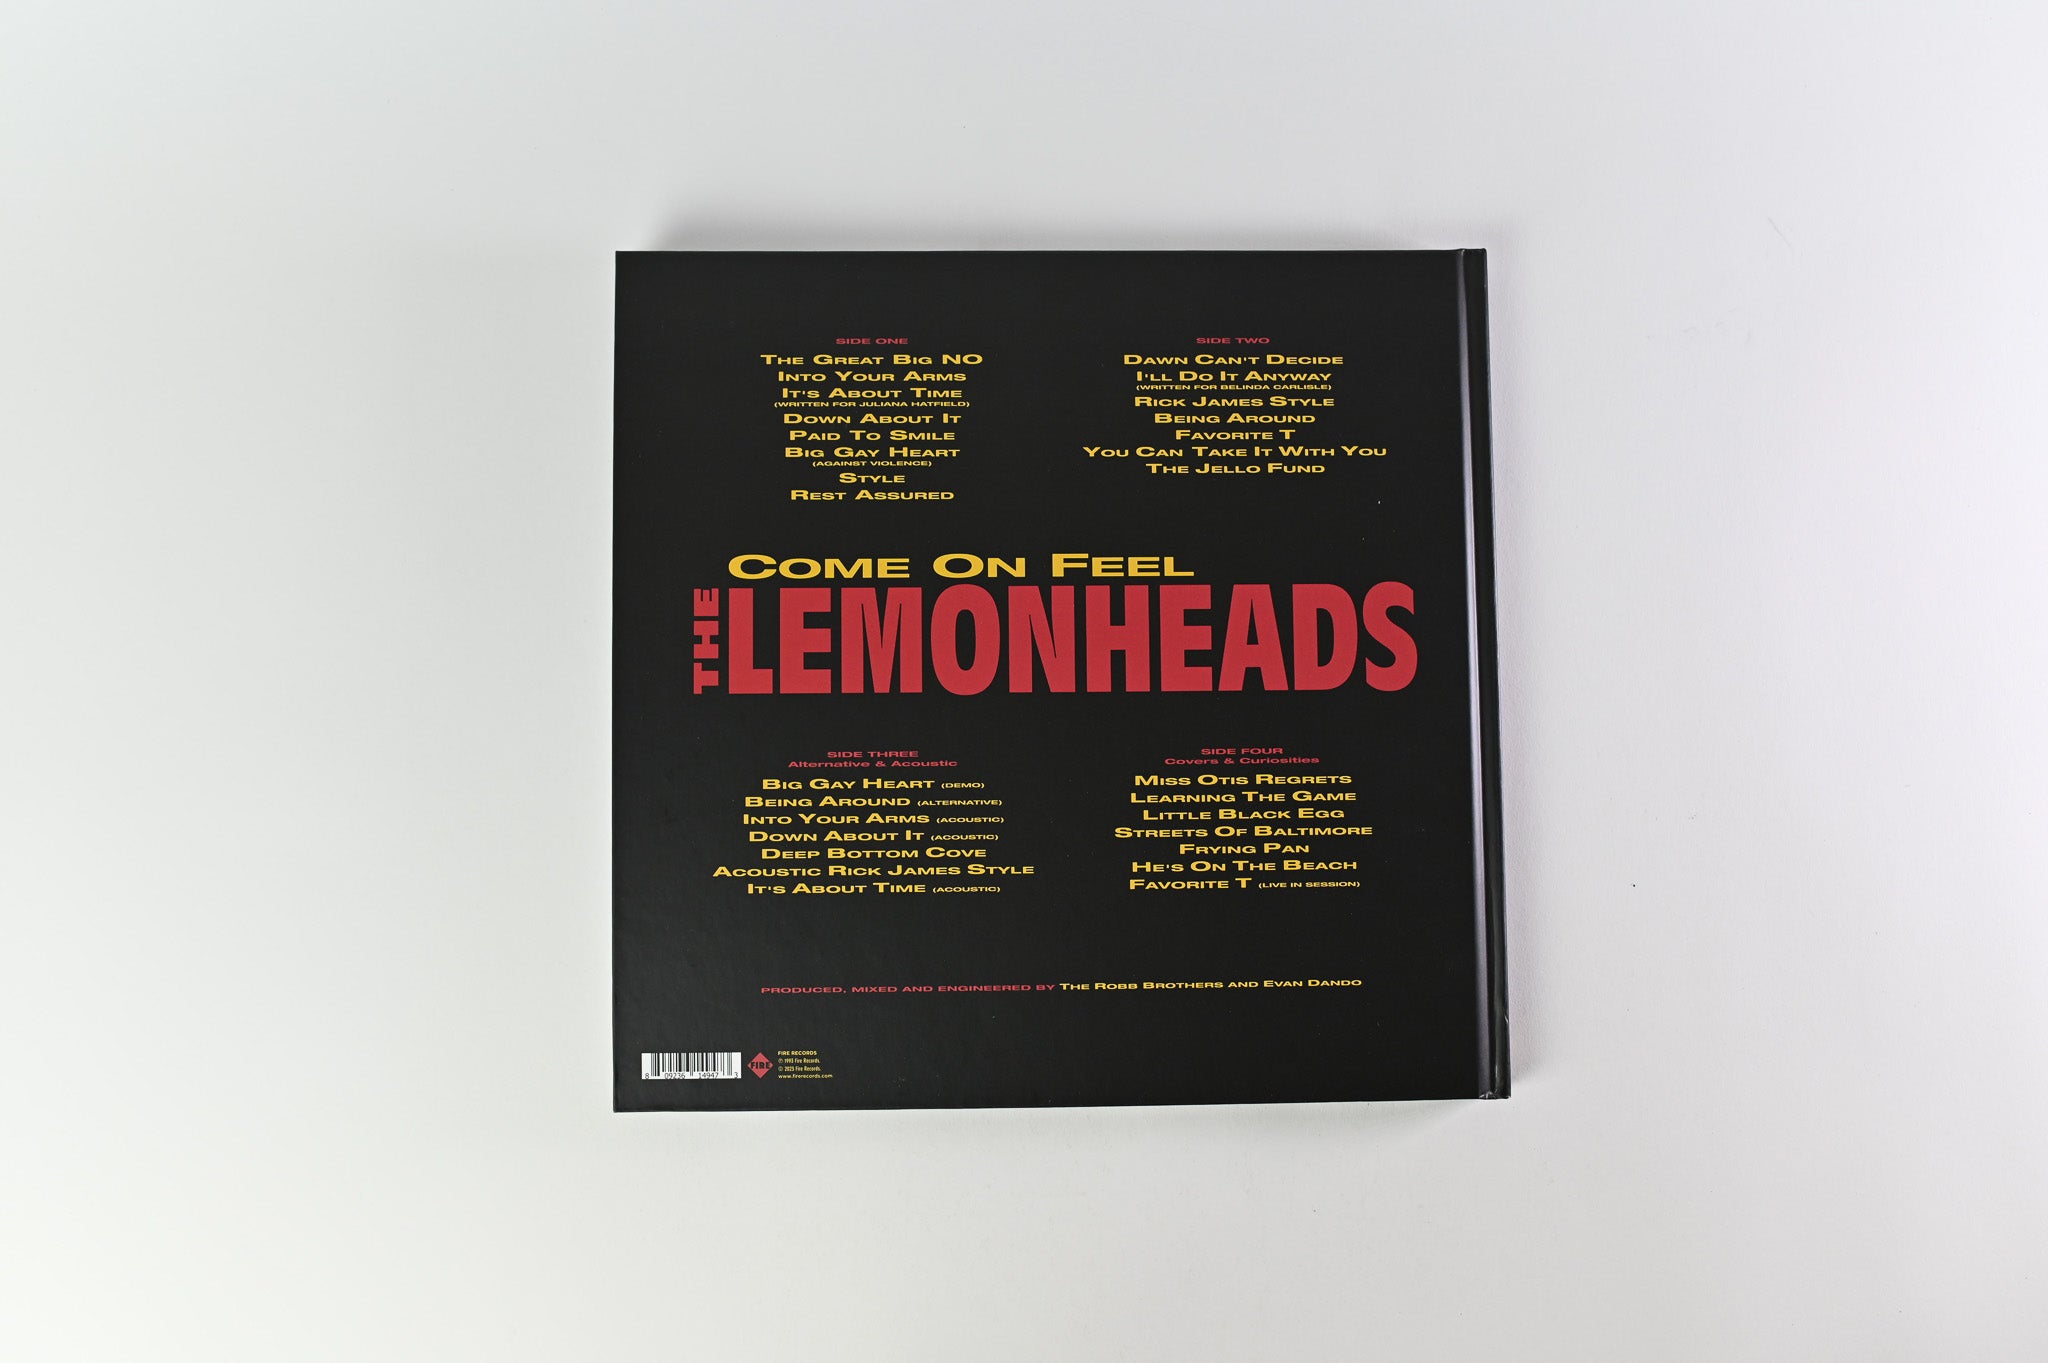 The Lemonheads - Come On Feel The Lemonheads on Fire Deluxe Edition Bookback Reissue